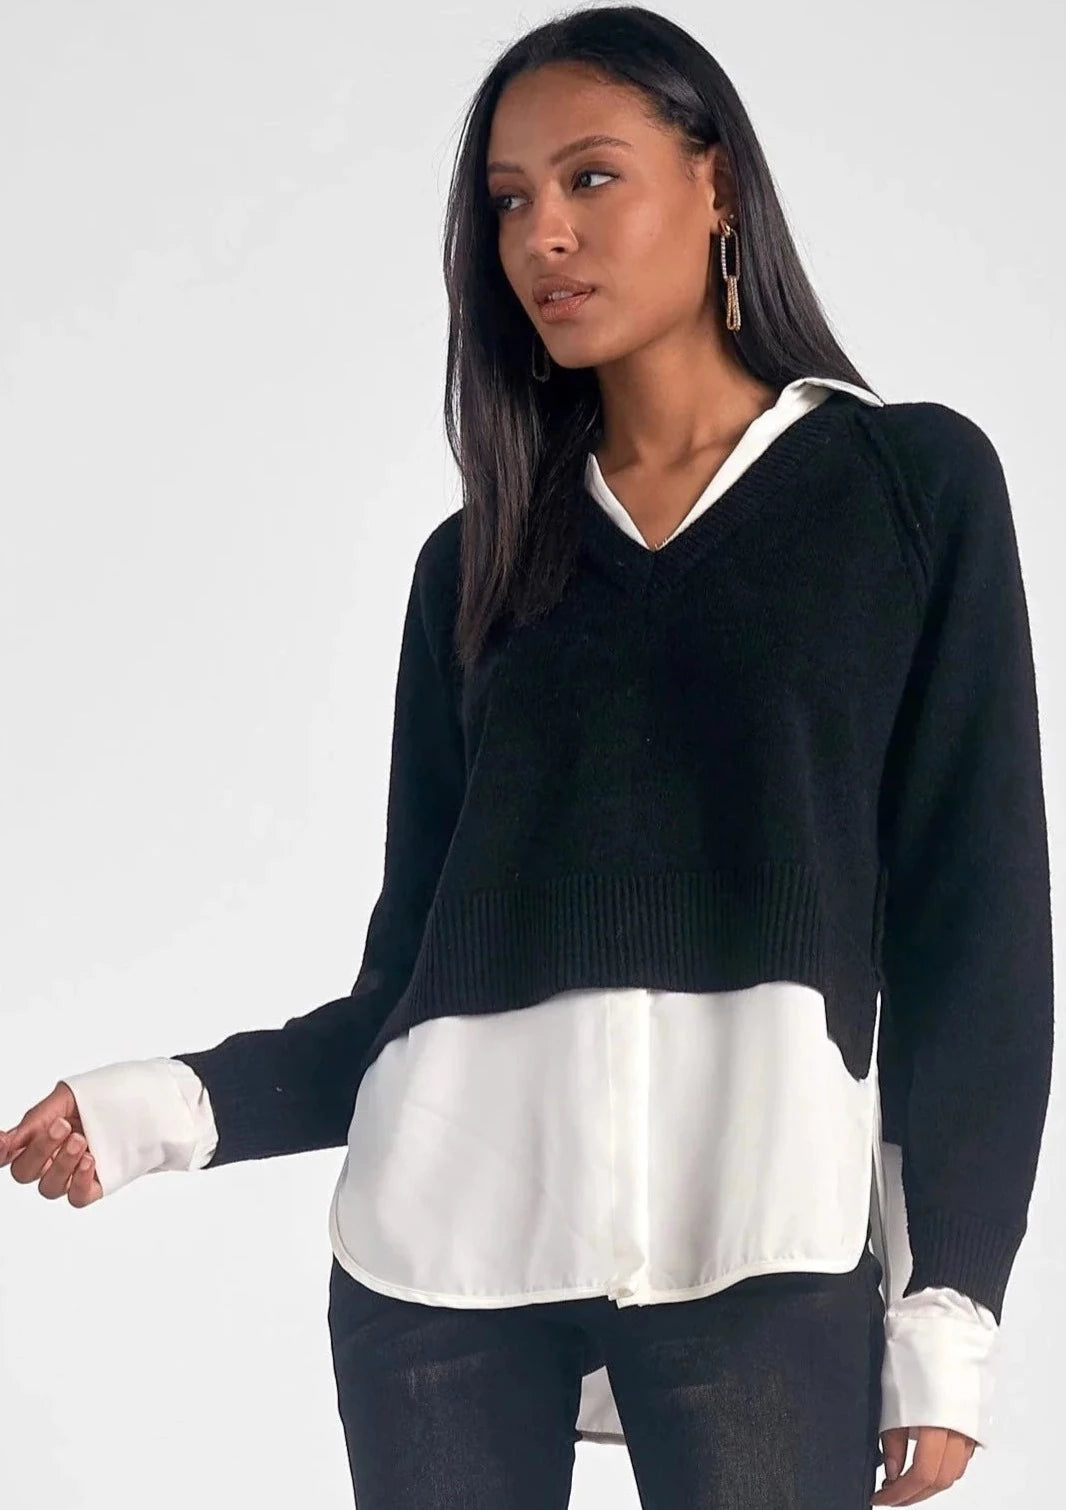 Elan L/S Shirt Sweater Combo Top - Black/White